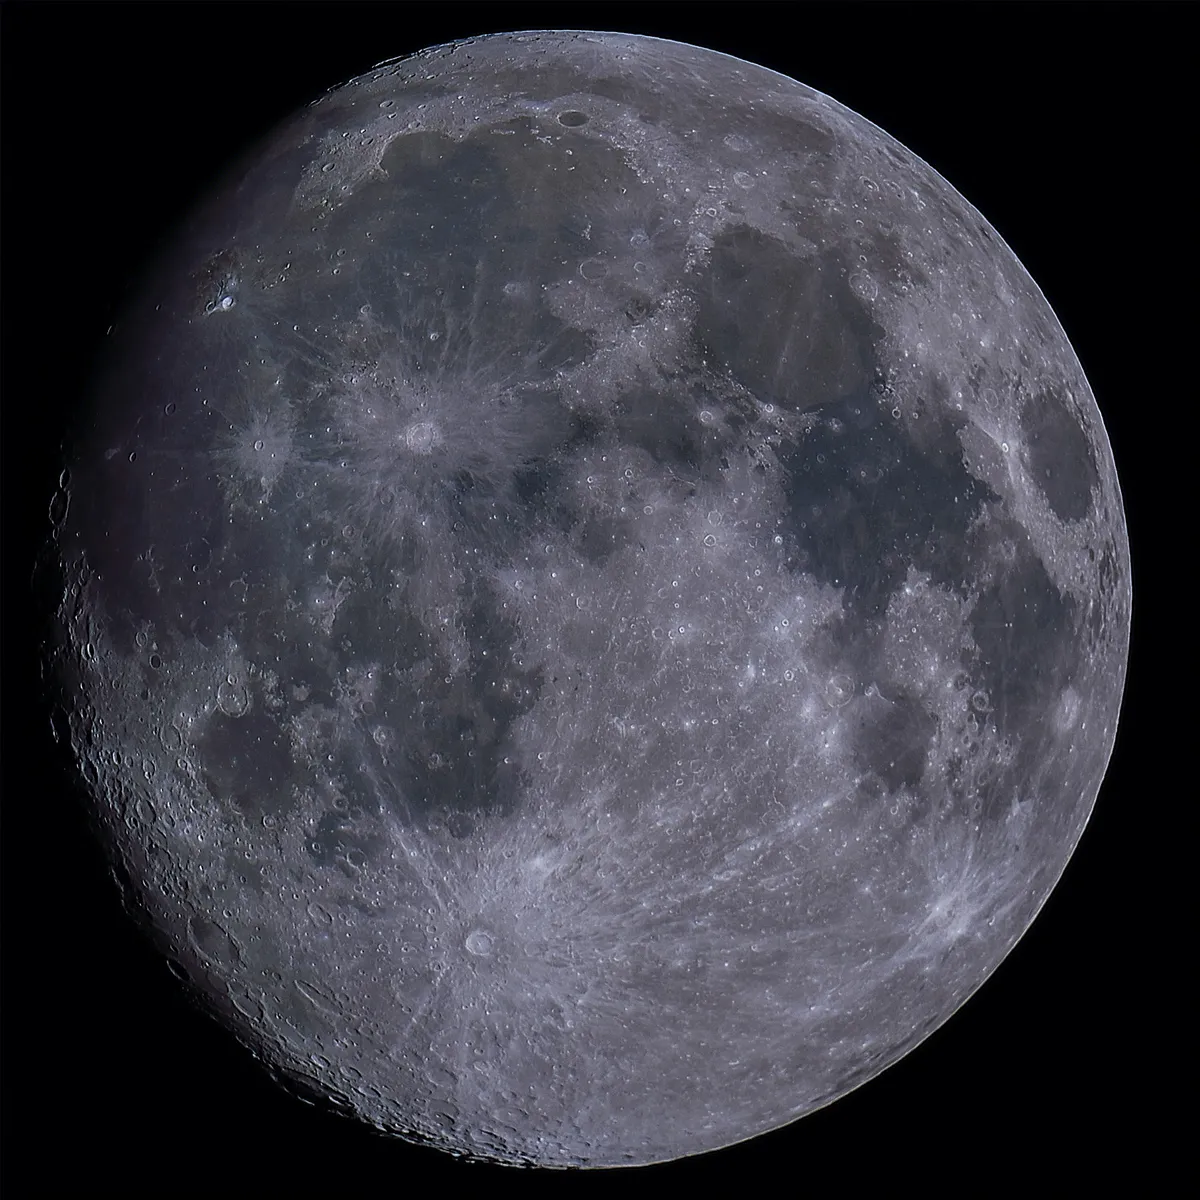 The Moon in High Resolution by Houssem Ksontini, Tunis, Tunisia. Equipment: Skywatcher 150/750, Neq3-2 mount, Nikon D5300